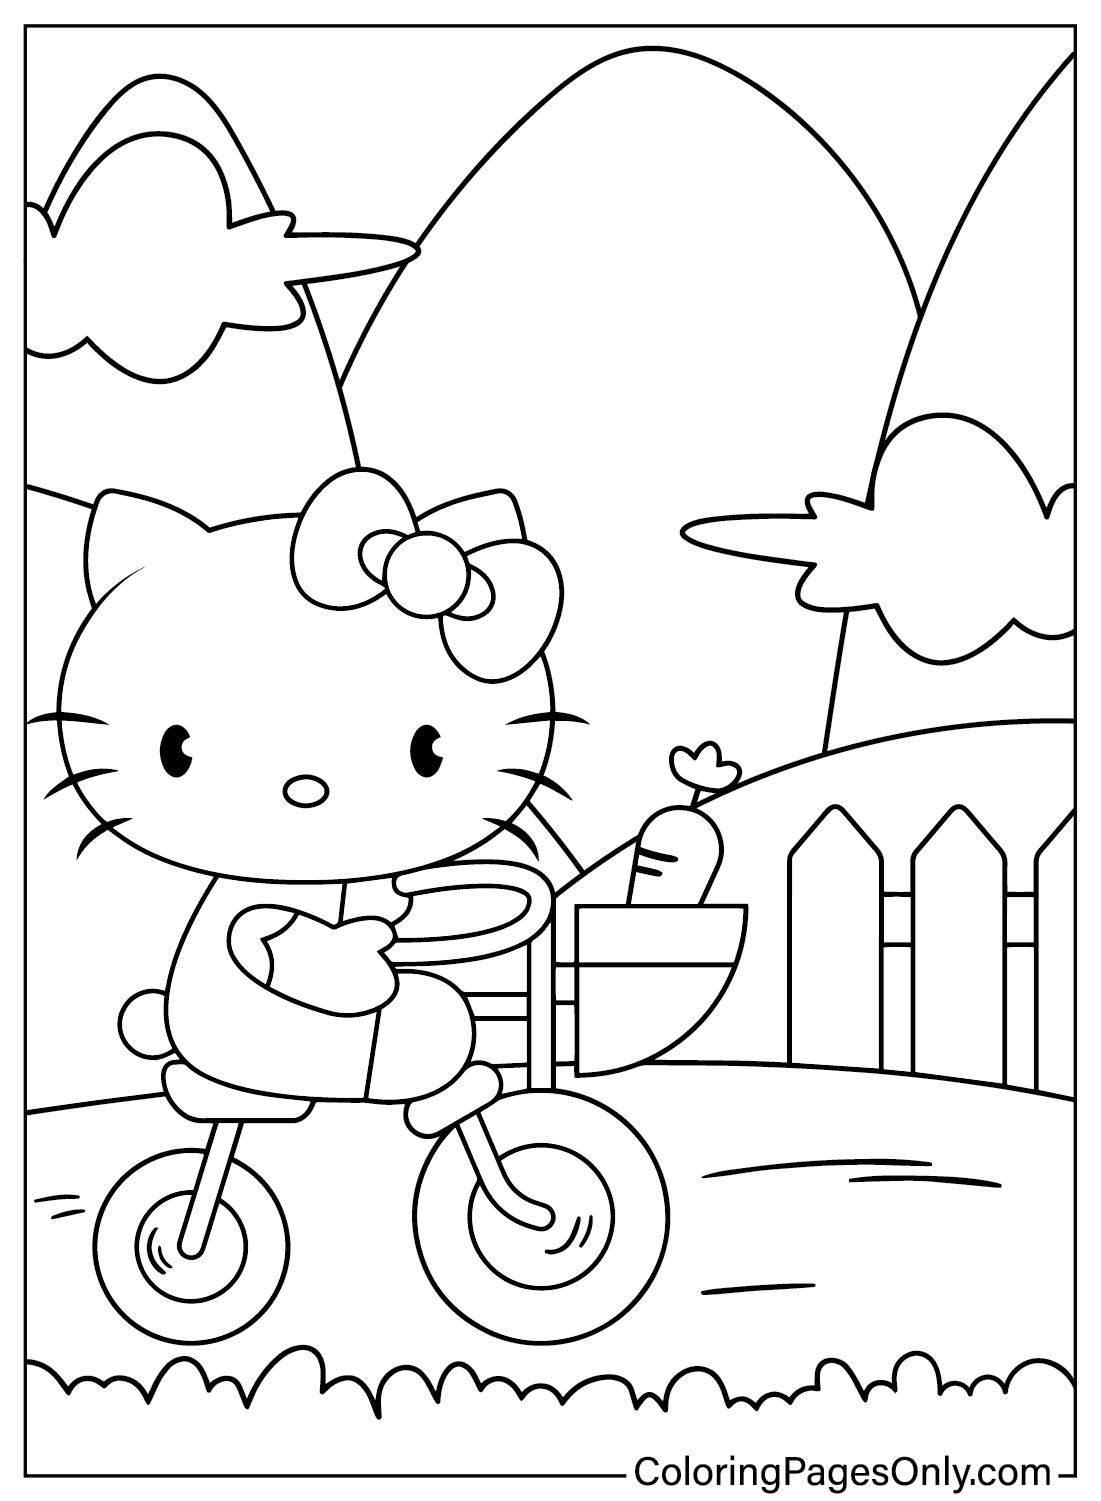 Página para colorir da Hello Kitty para impressão